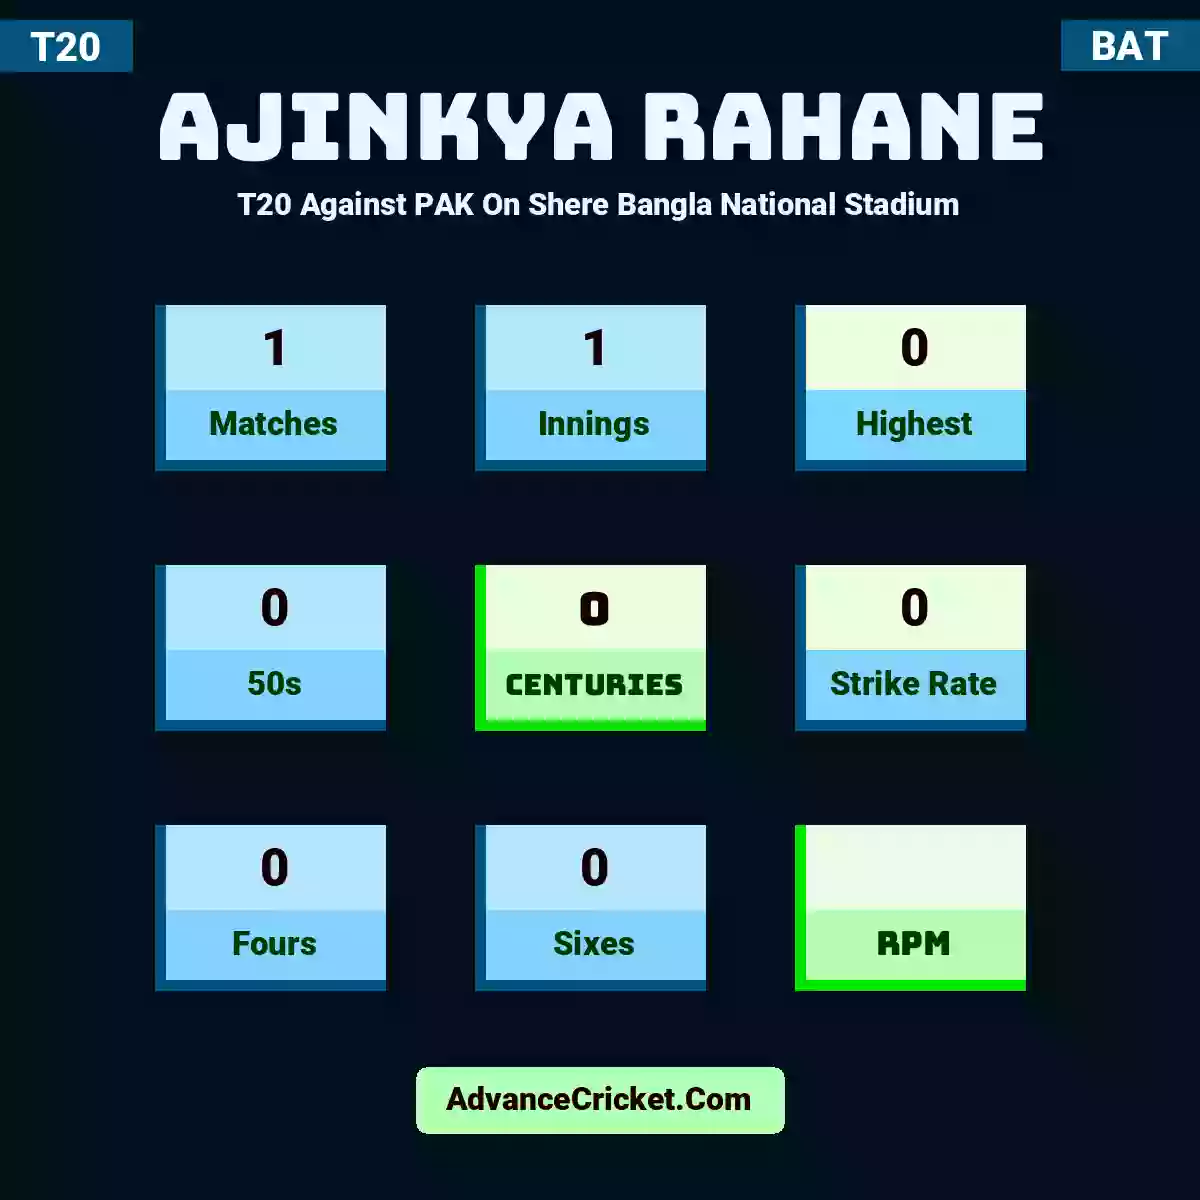 Ajinkya Rahane T20  Against PAK On Shere Bangla National Stadium, Ajinkya Rahane played 1 matches, scored 0 runs as highest, 0 half-centuries, and 0 centuries, with a strike rate of 0. A.Rahane hit 0 fours and 0 sixes.